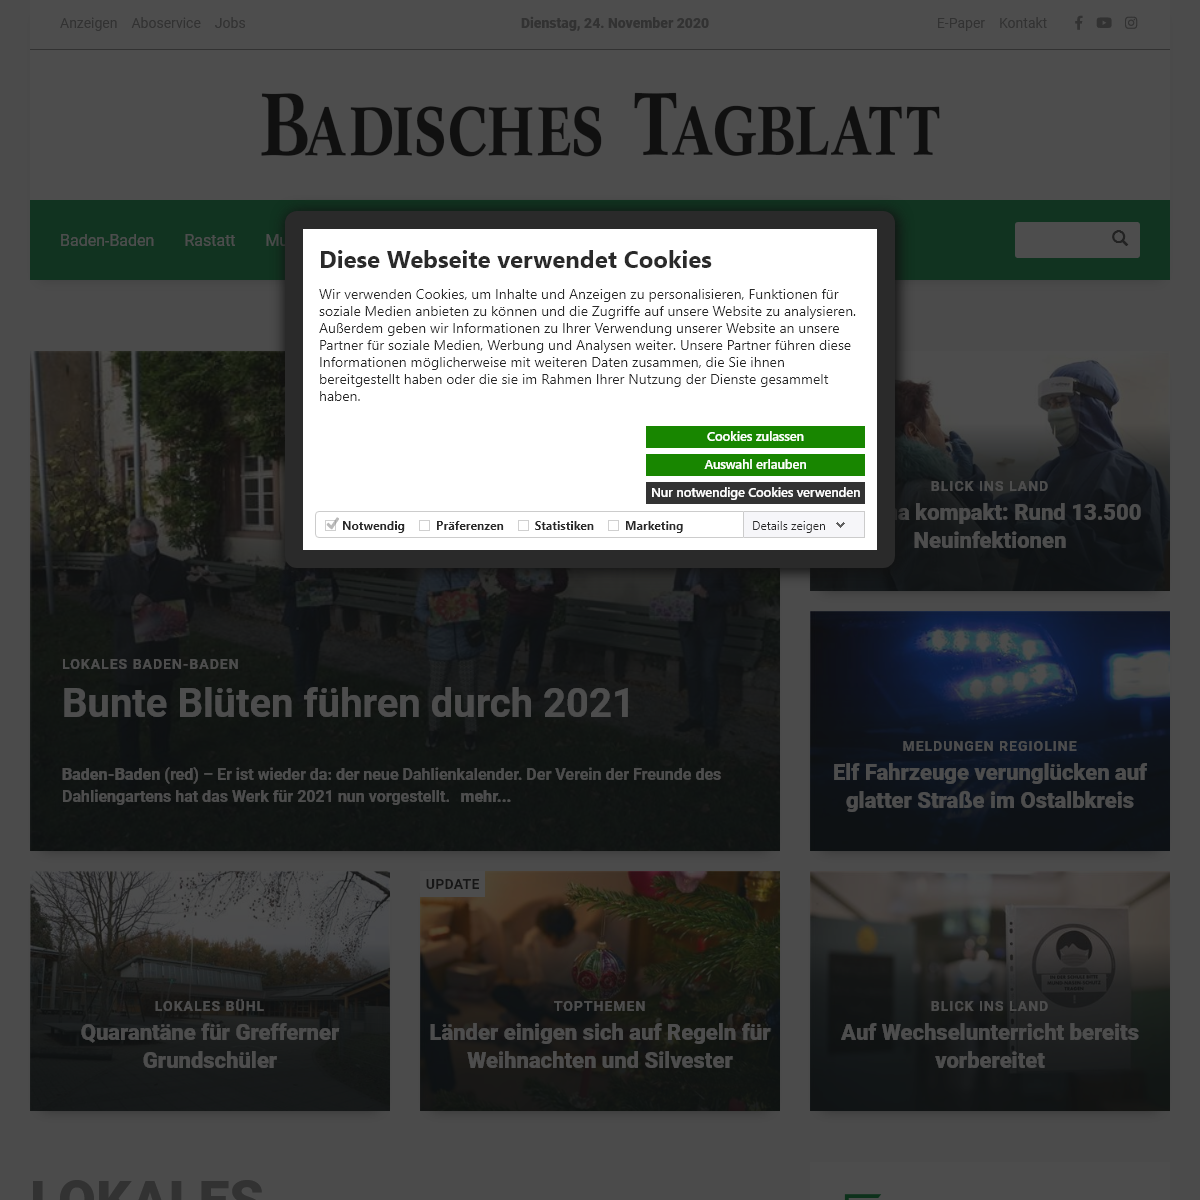 A complete backup of badisches-tagblatt.de